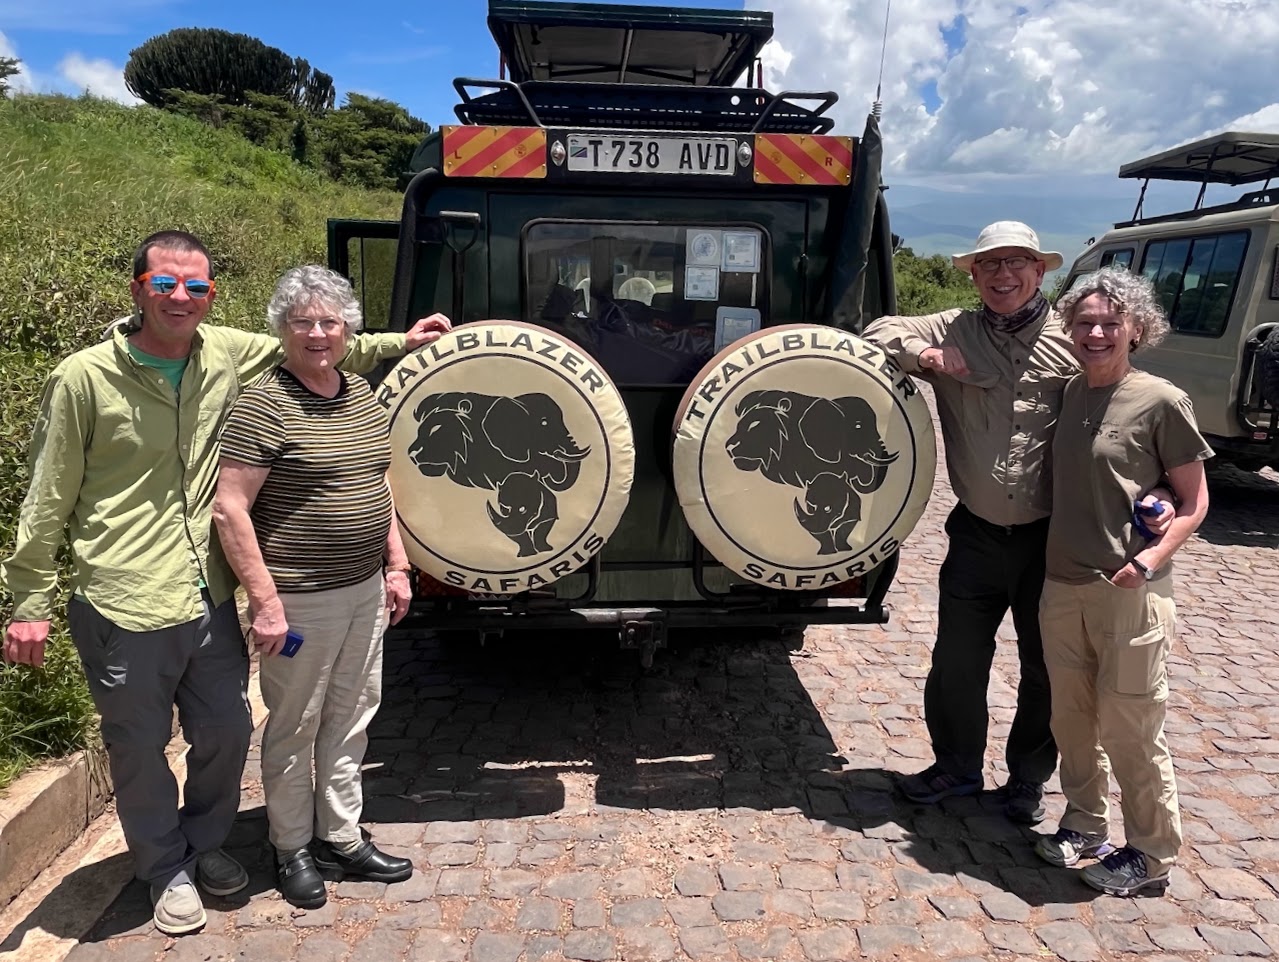 Tech Alumni on safari pose with the Trailblazers jeep